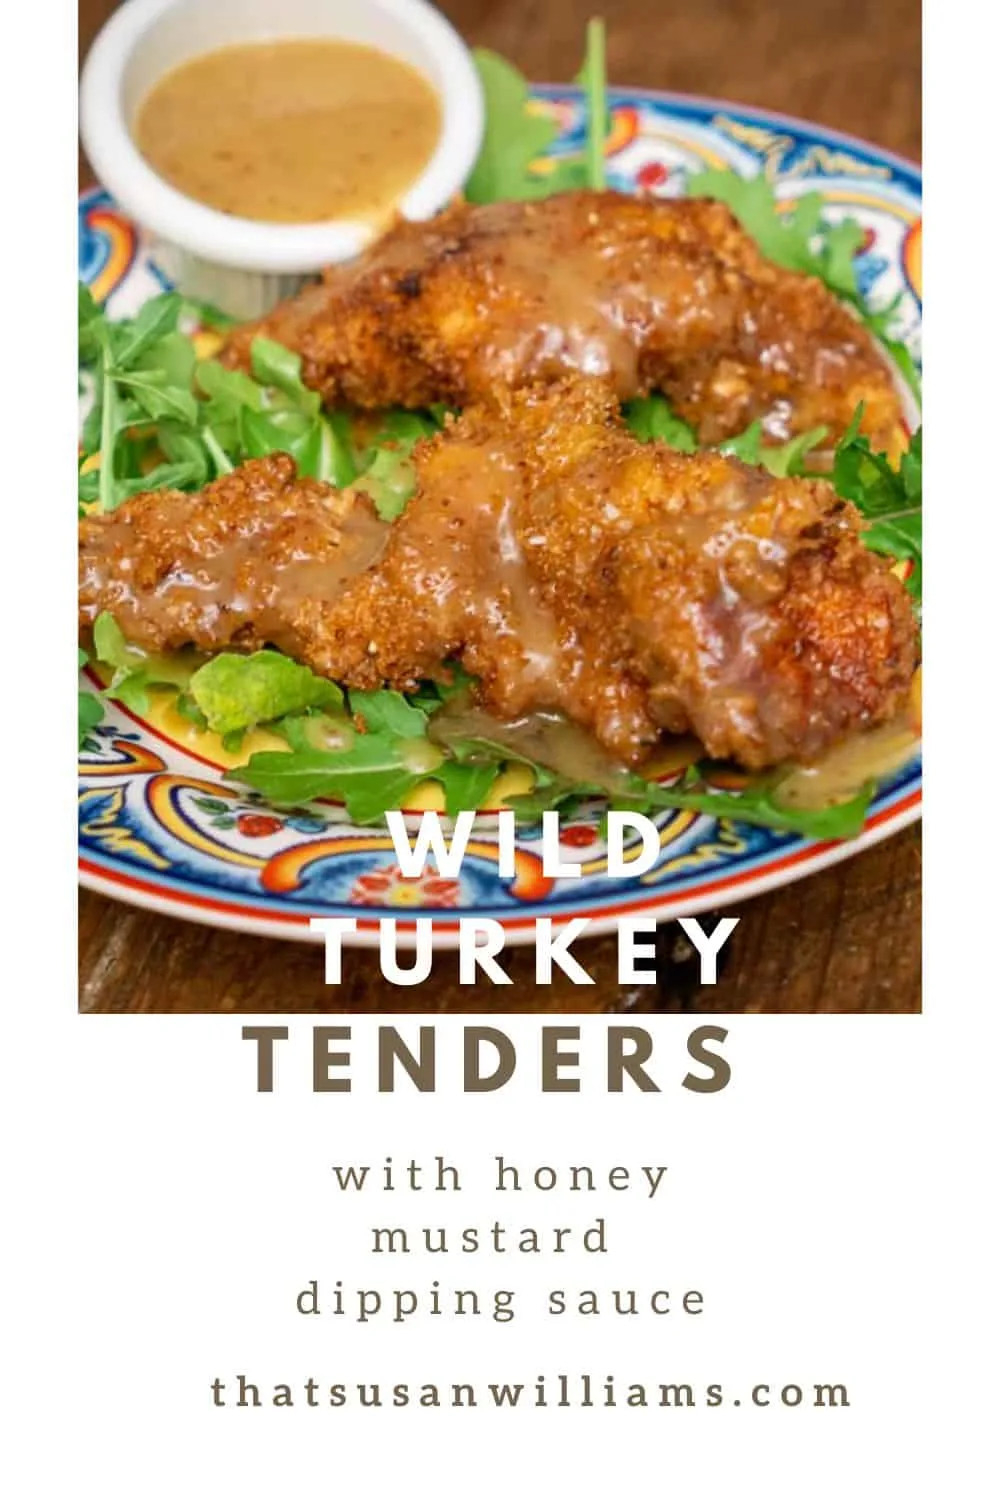 A Pinterest pin for Wild Turkey Tenders